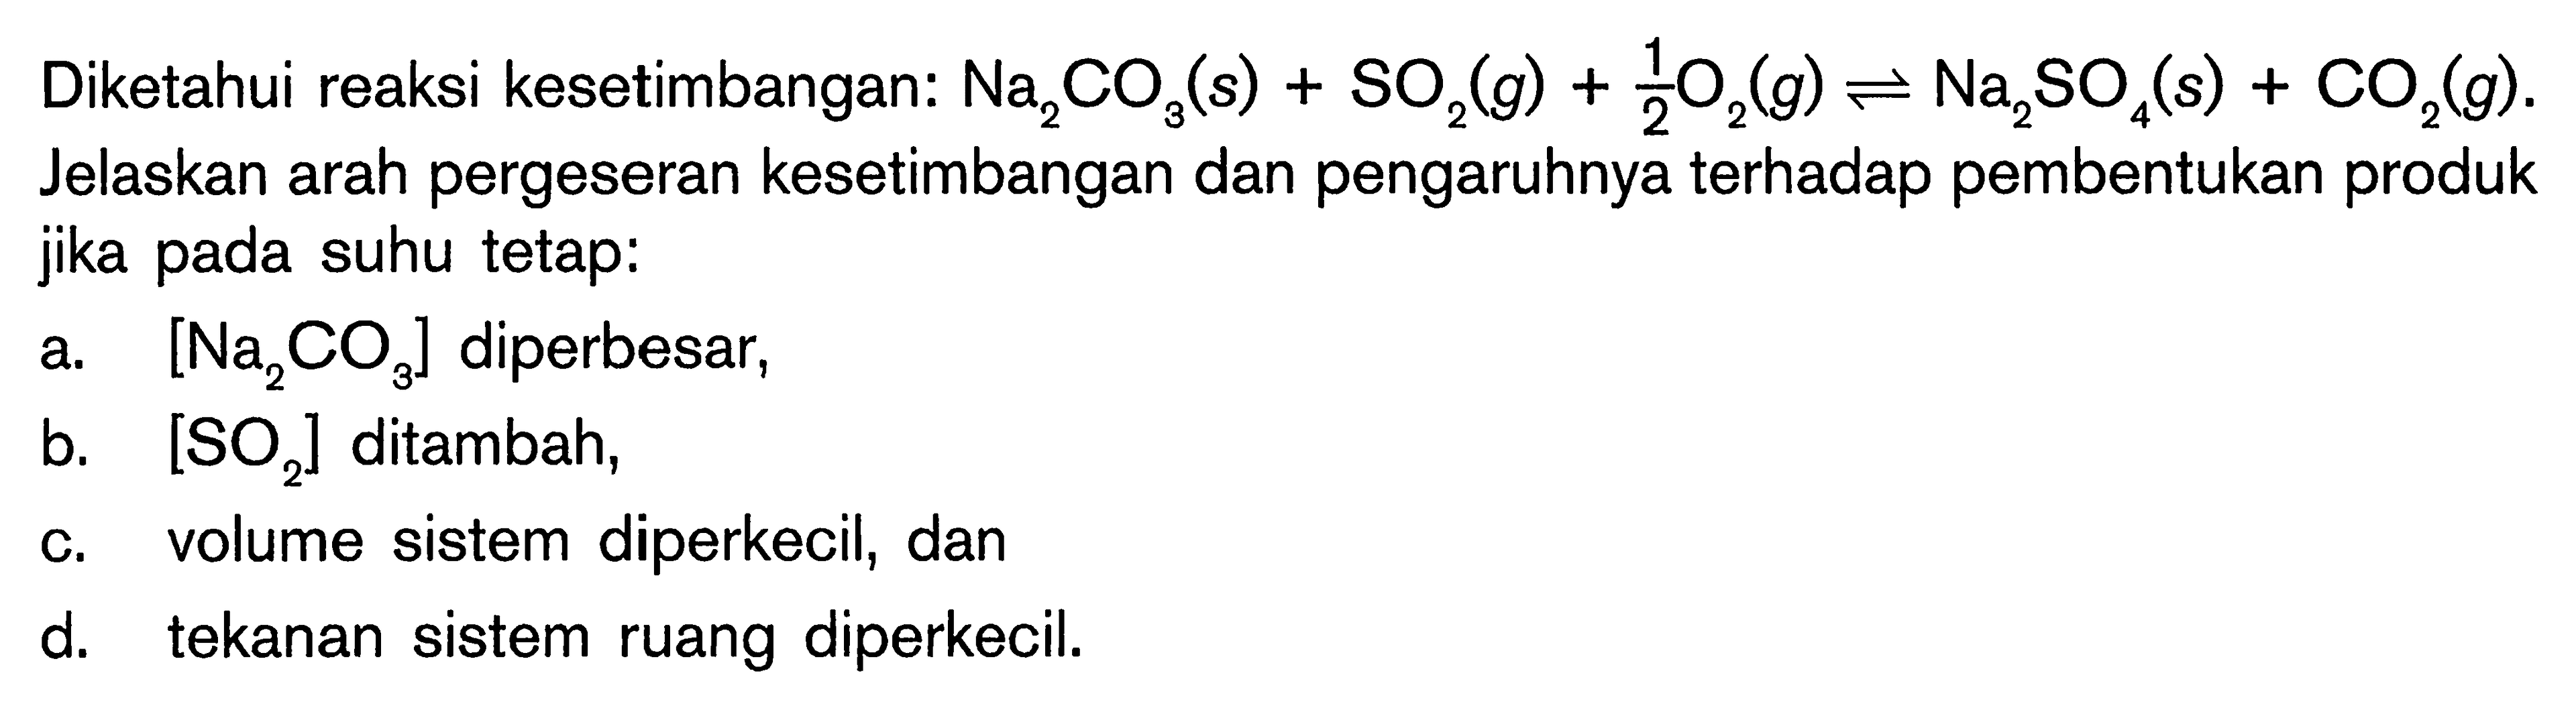 Diketahui reaksi kesetimbangan: Na2CO3(s) + SO2(g) + 1/2O2(g) <=> Na2SO4(s) + CO2(g). Jelaskan arah pergeseran kesetimbangan dan pengaruhnya terhadap pembentukan produk jika pada suhu tetap: a. [Na2CO3] diperbesar, b. [SO2] ditambah, c. volume sistem diperkecil, dan d. tekanan sistem ruang diperkecil.